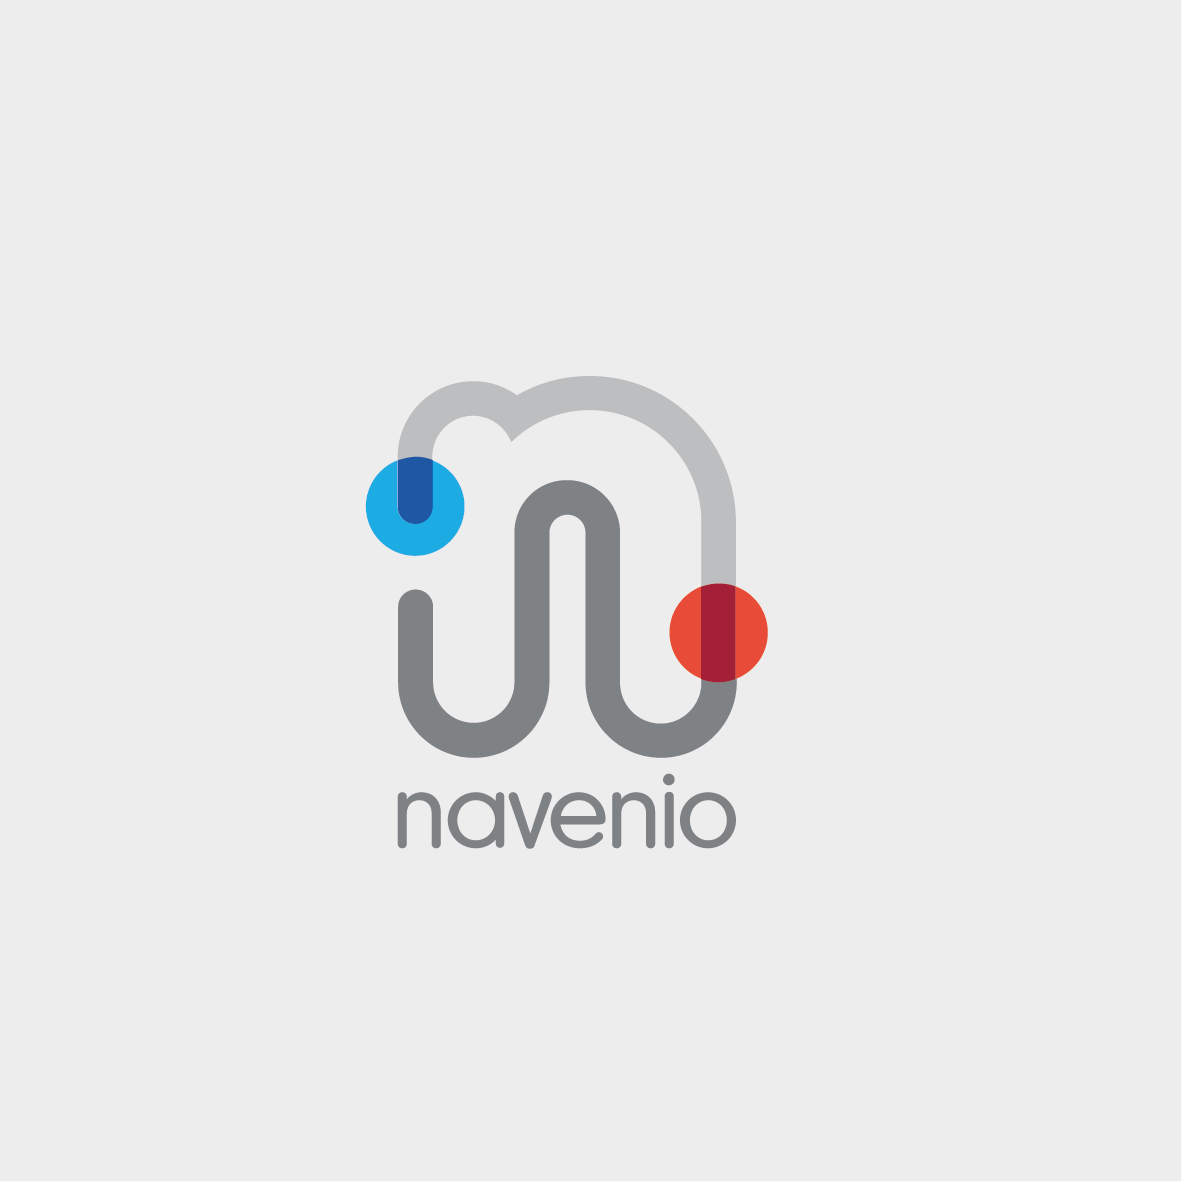 Navenio Series B